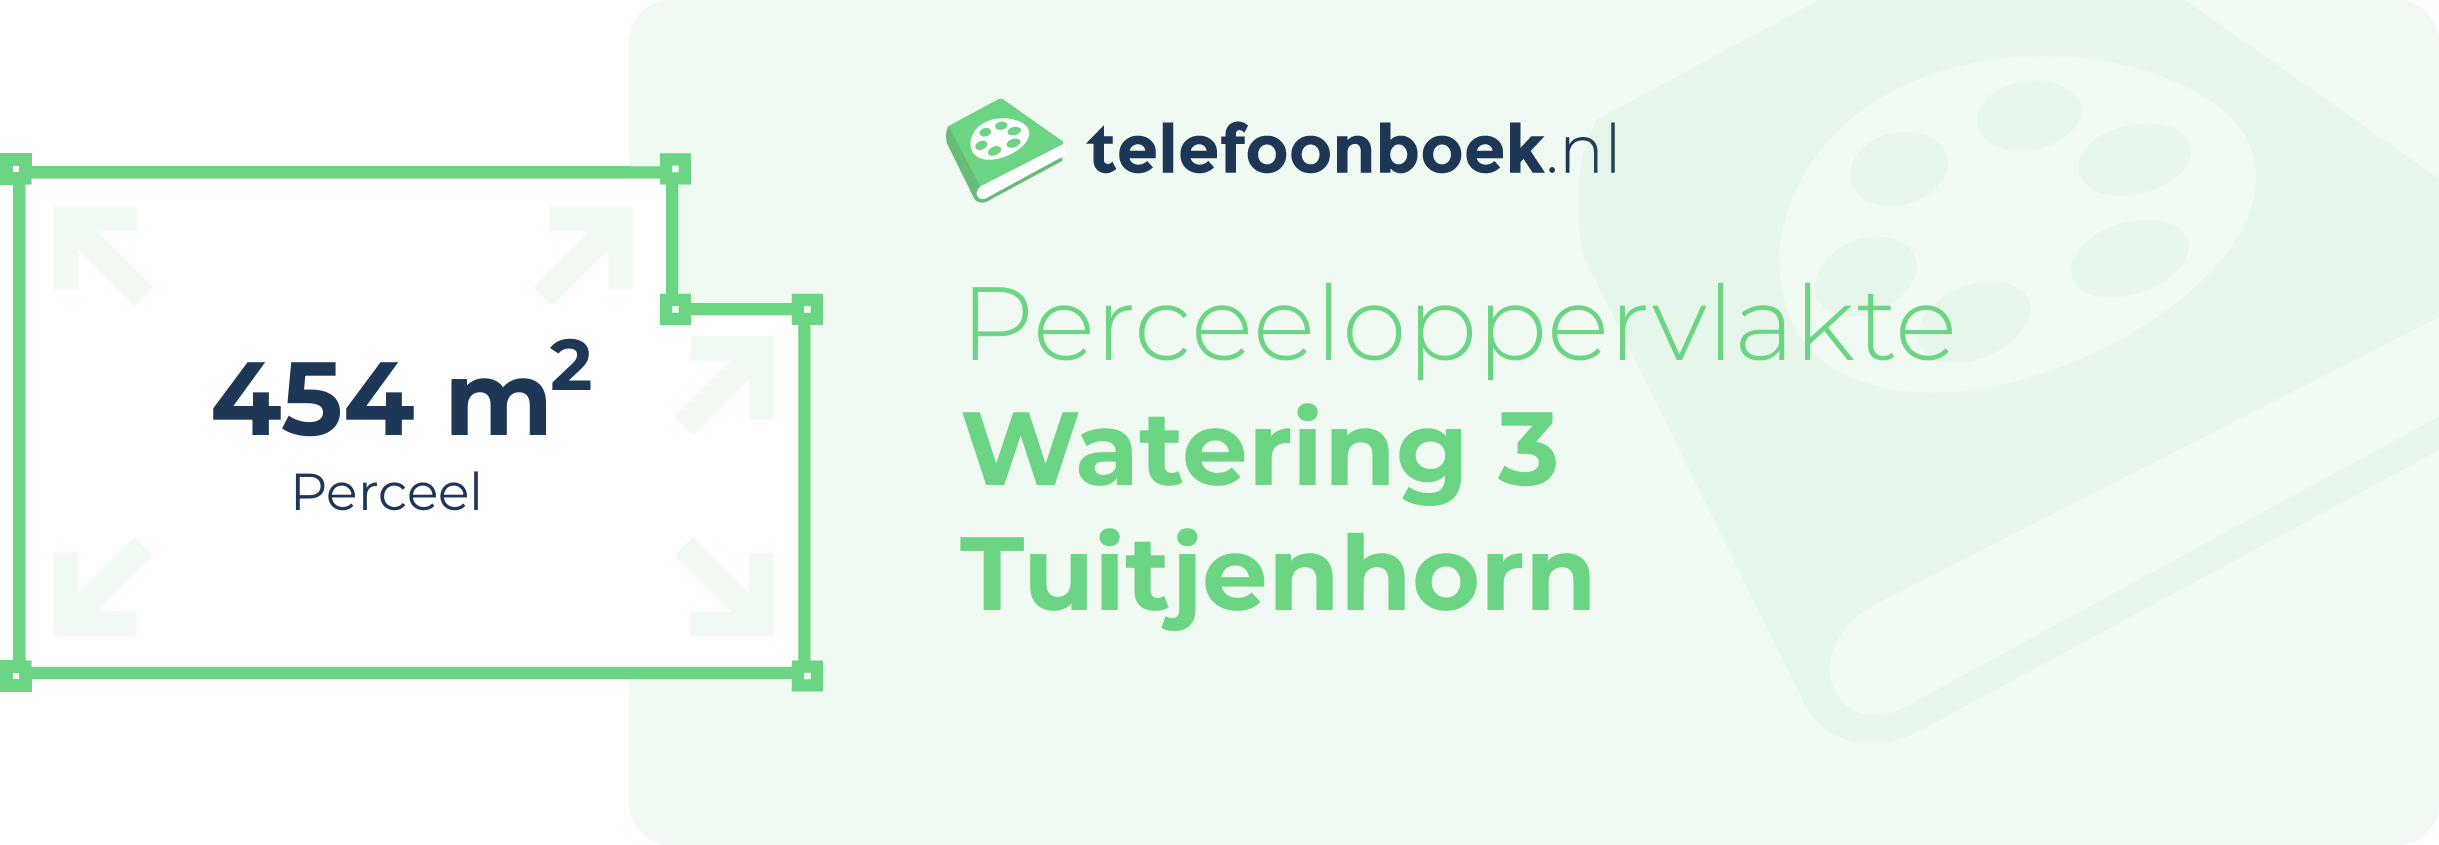 Perceeloppervlakte Watering 3 Tuitjenhorn